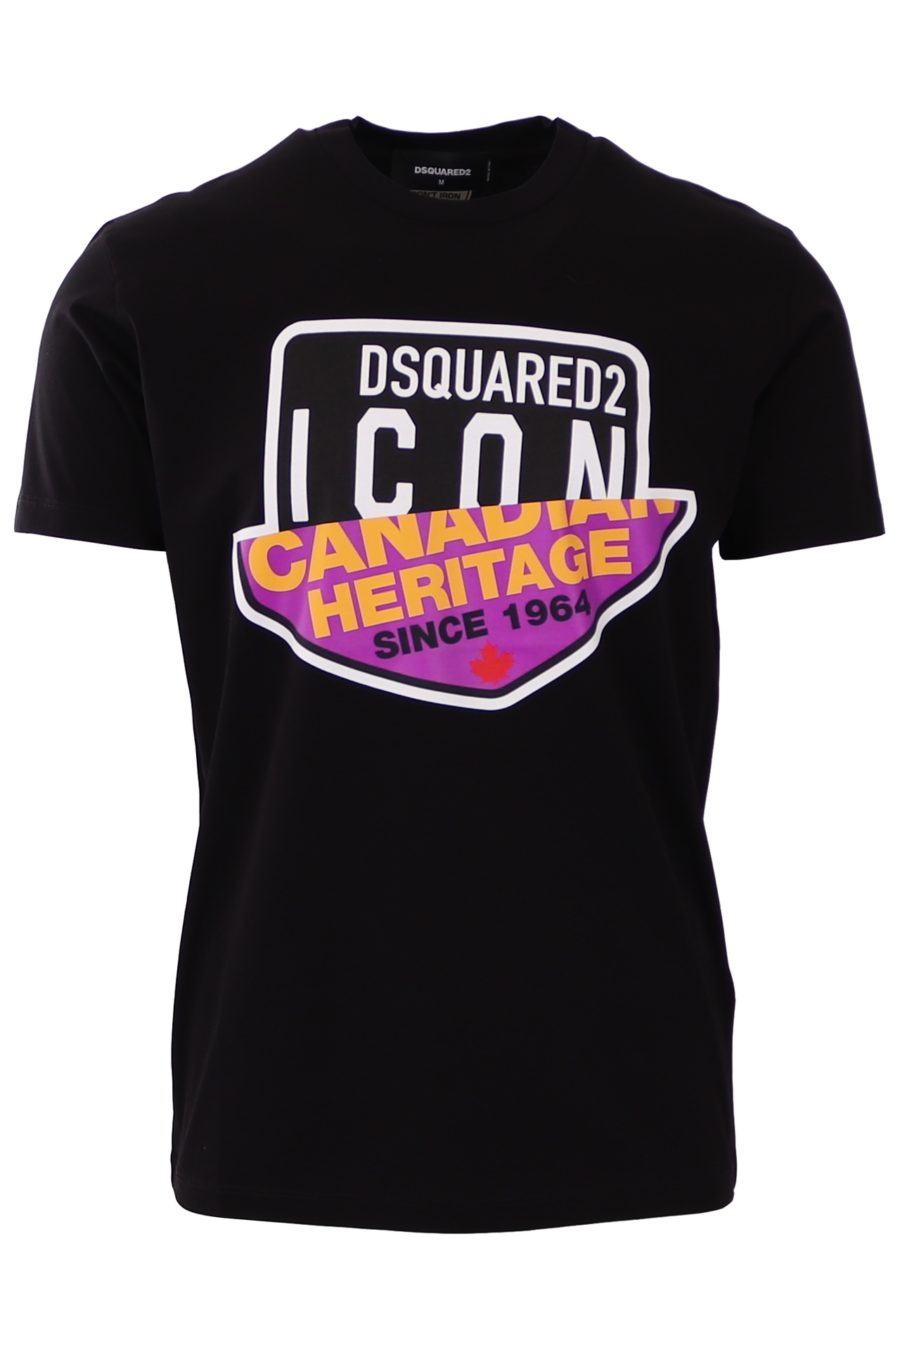 Camiseta Dsquared2 negra canadian heritage - de335816d16ffadfbbf7c5cb2d8a8029c219d6c1